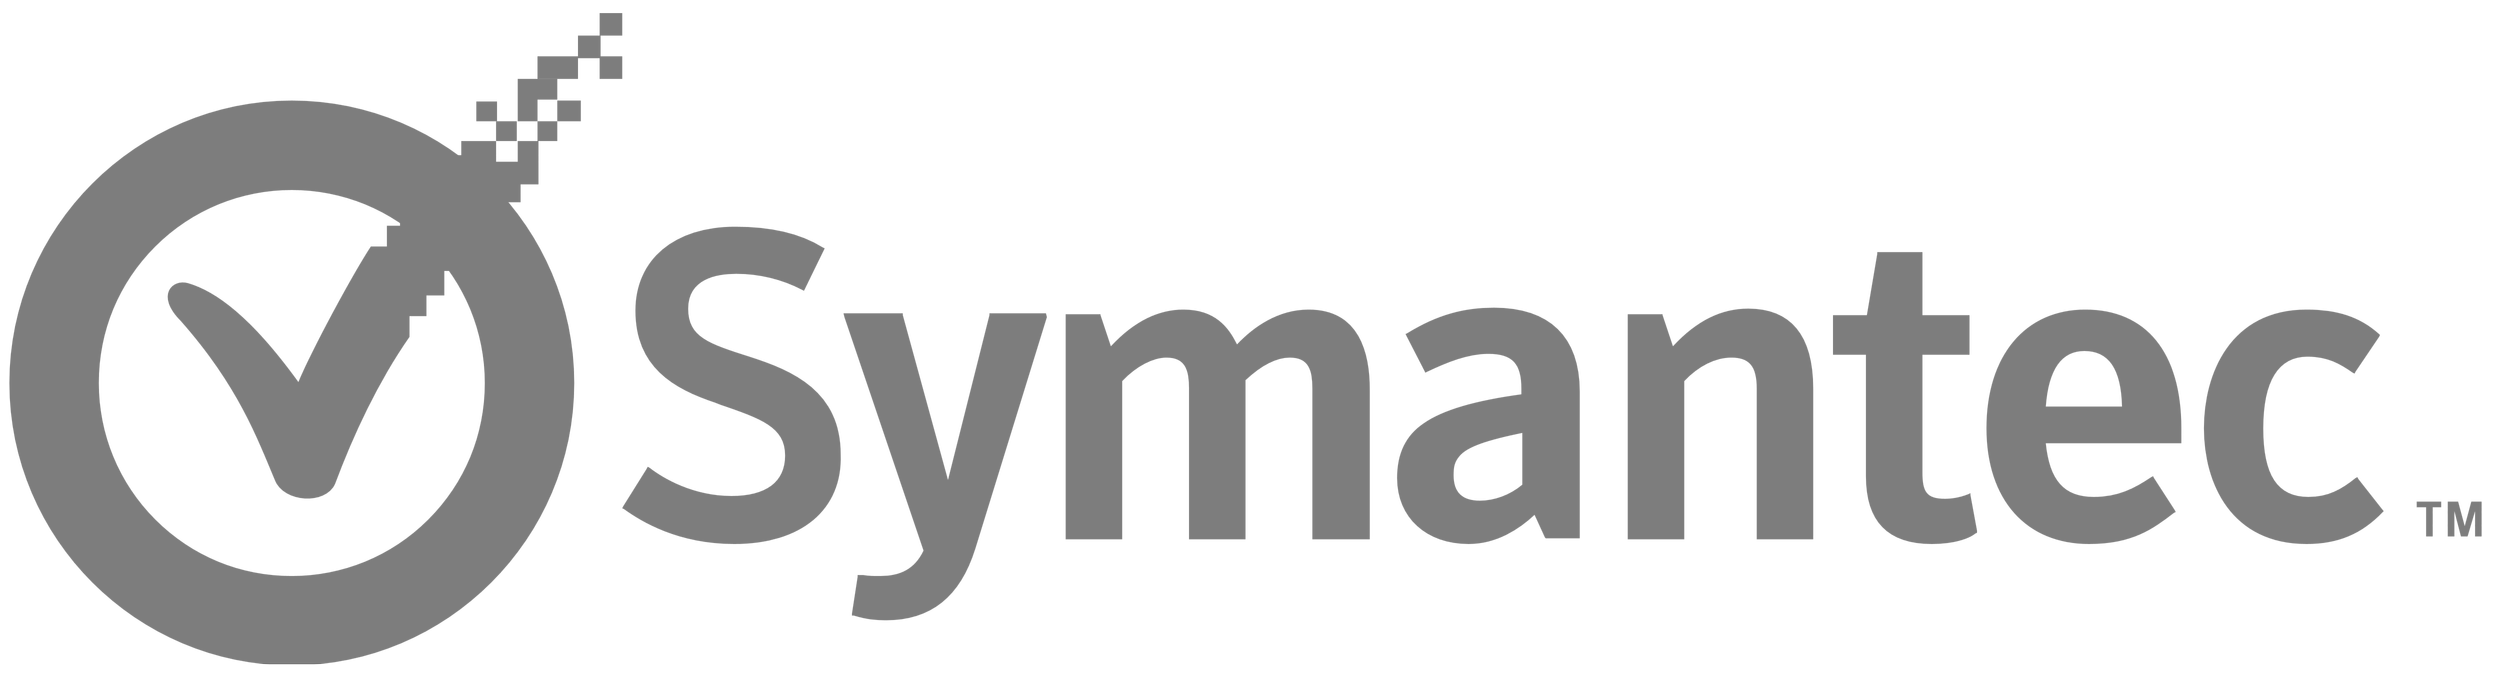 Symantec_logo_gray.png